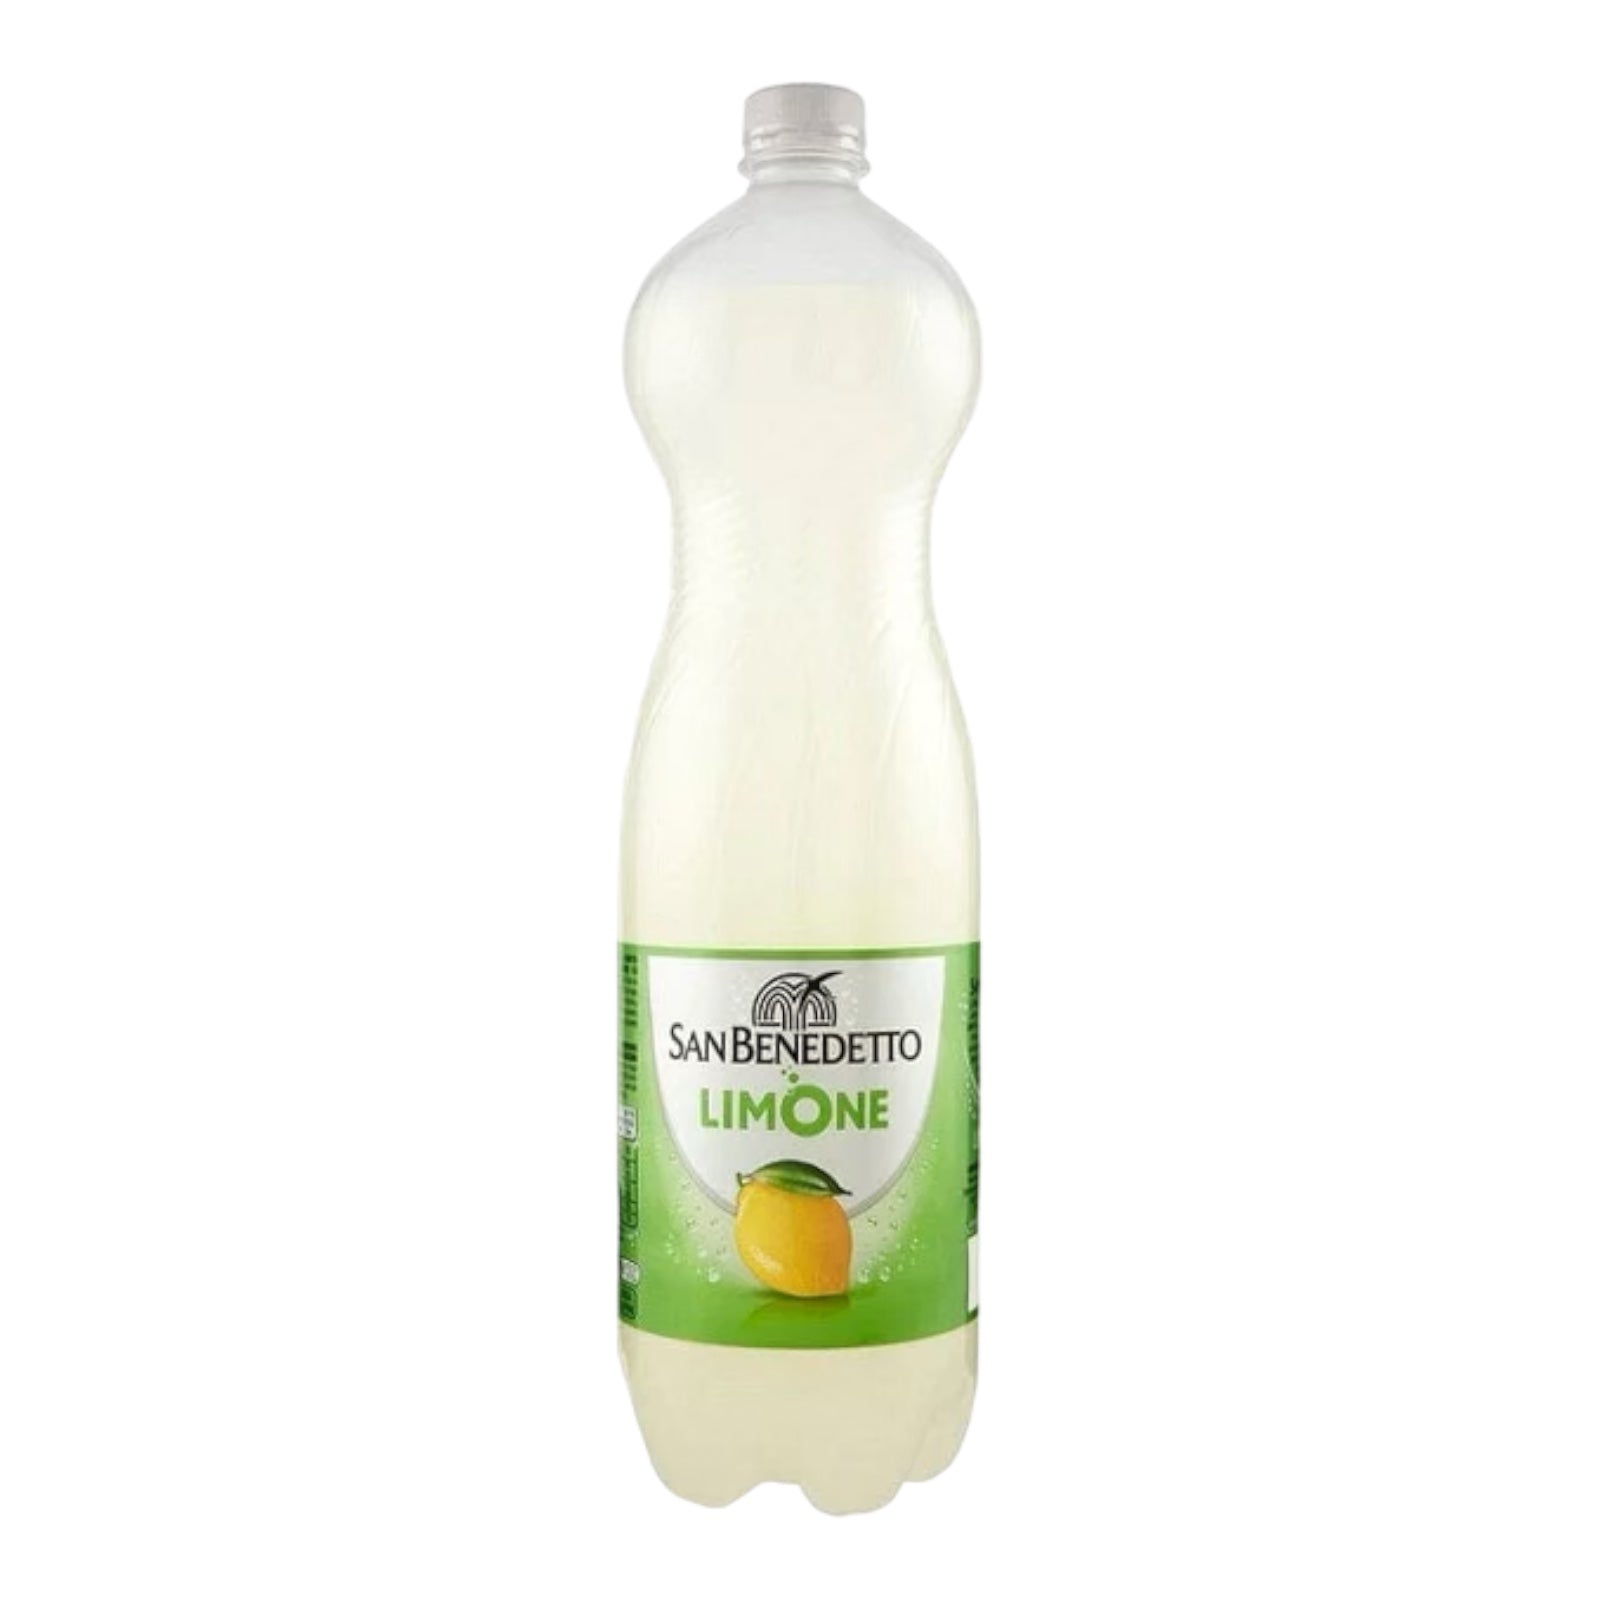 San Benedetto Limonata Italian Lemon Soft Drink 
1.5L